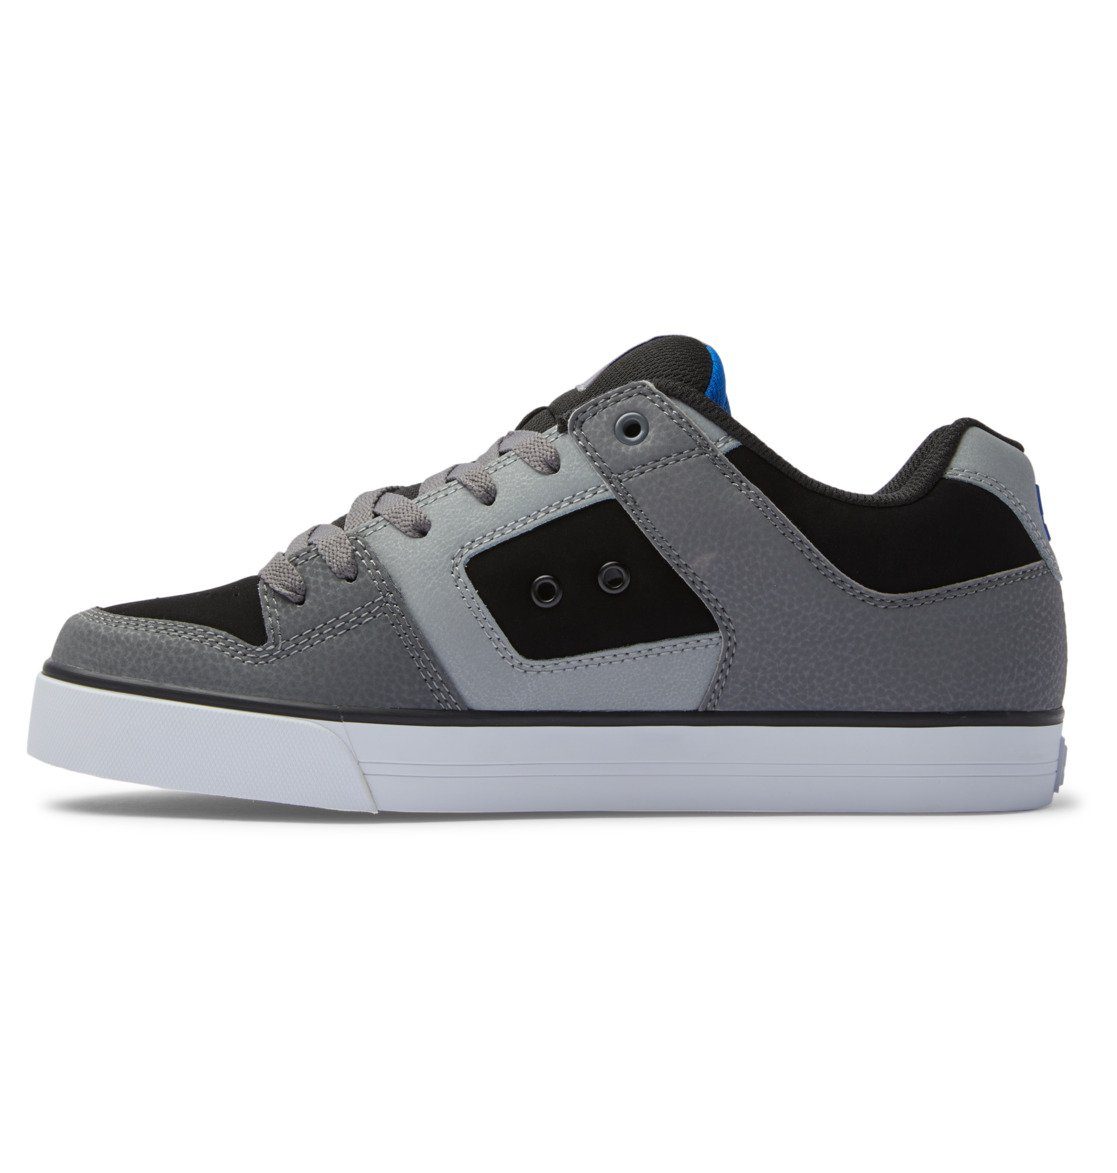 DC Shoes Pure Sneaker Black/Grey/Blue